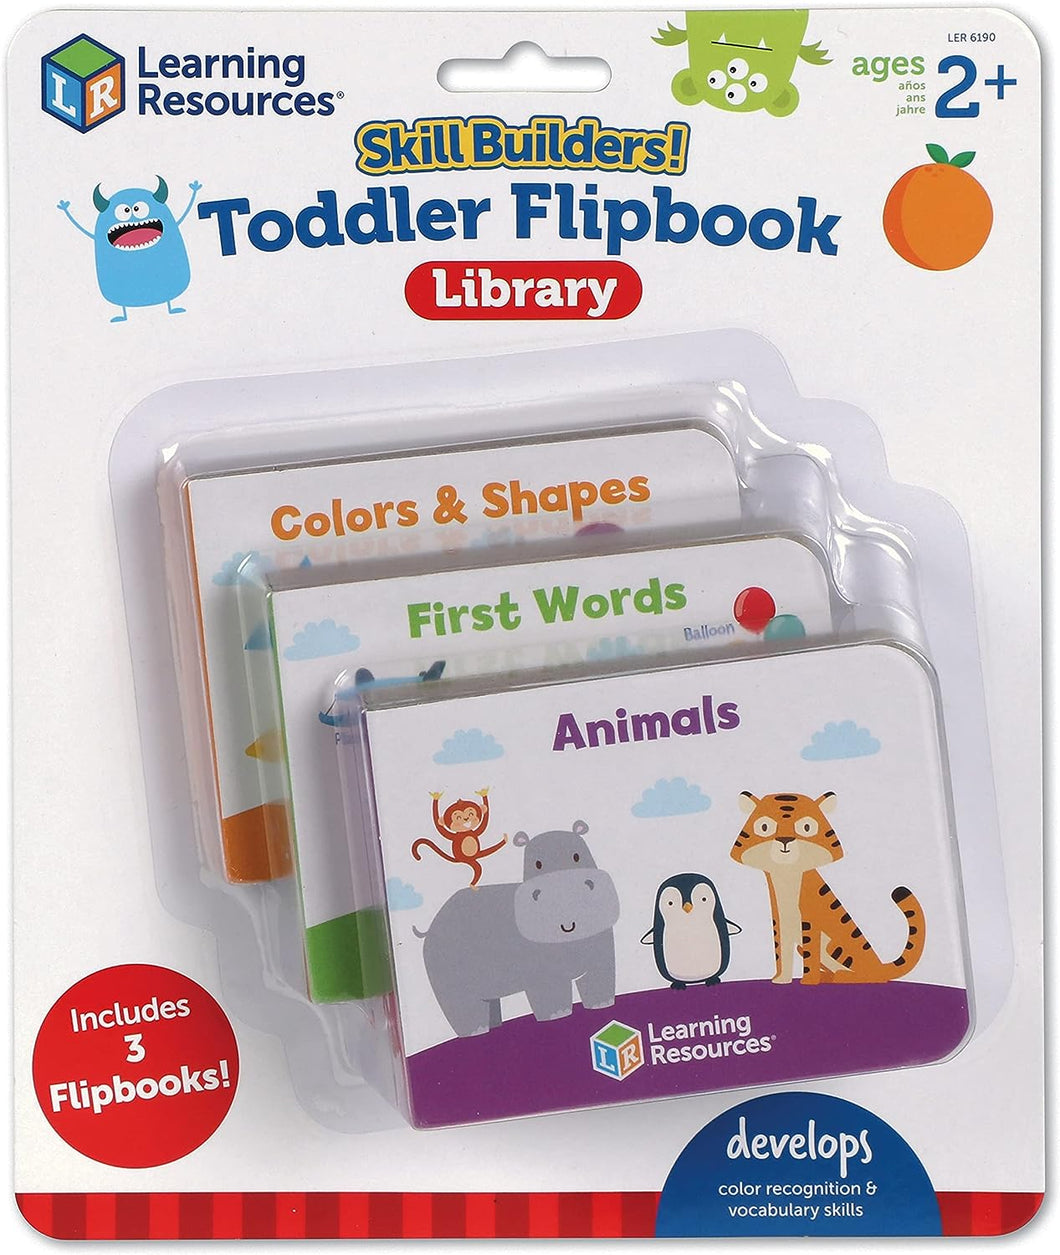 Skill Builder Toddler Flipbook Library